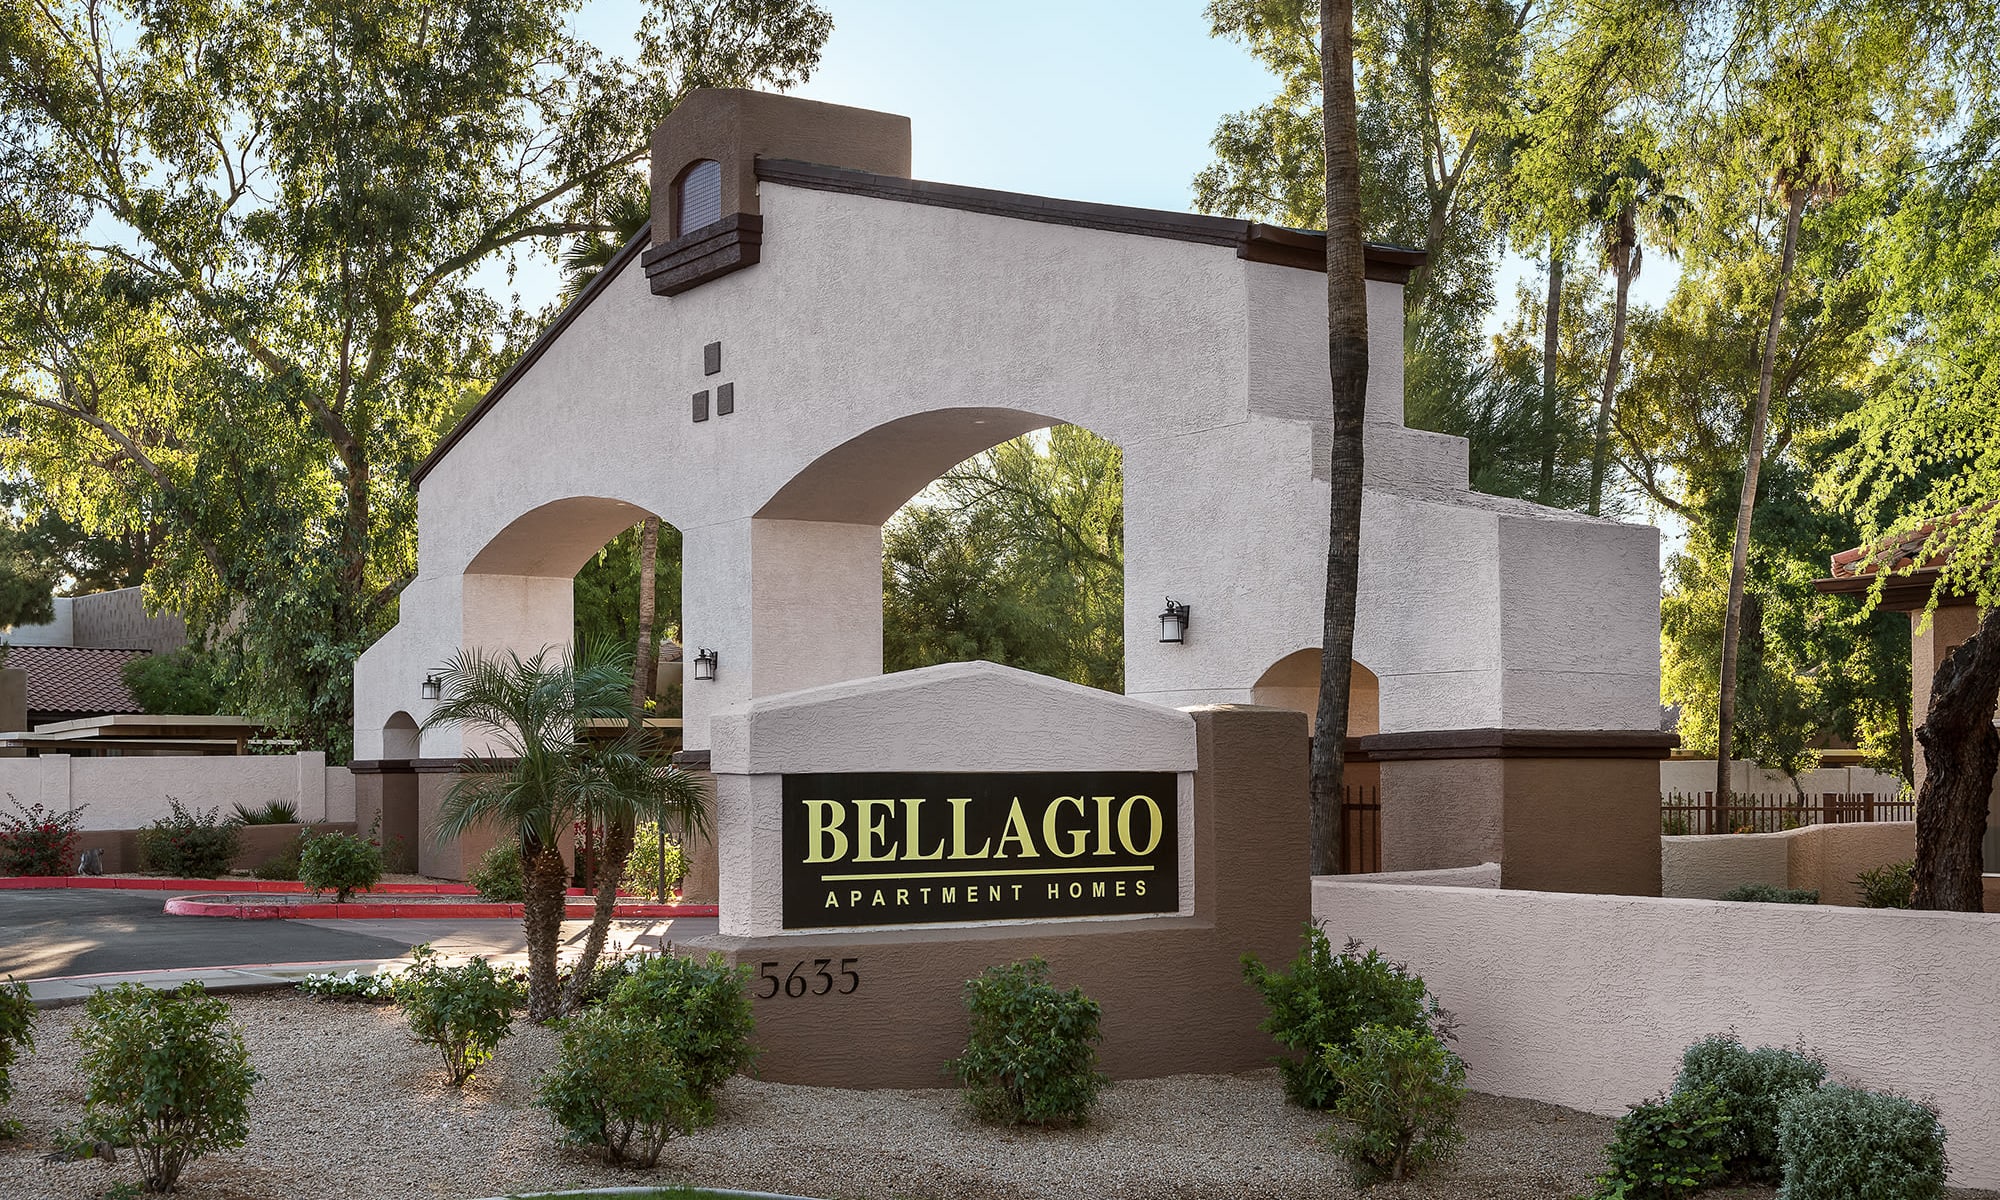 Apartments at Bellagio in Scottsdale, Arizona